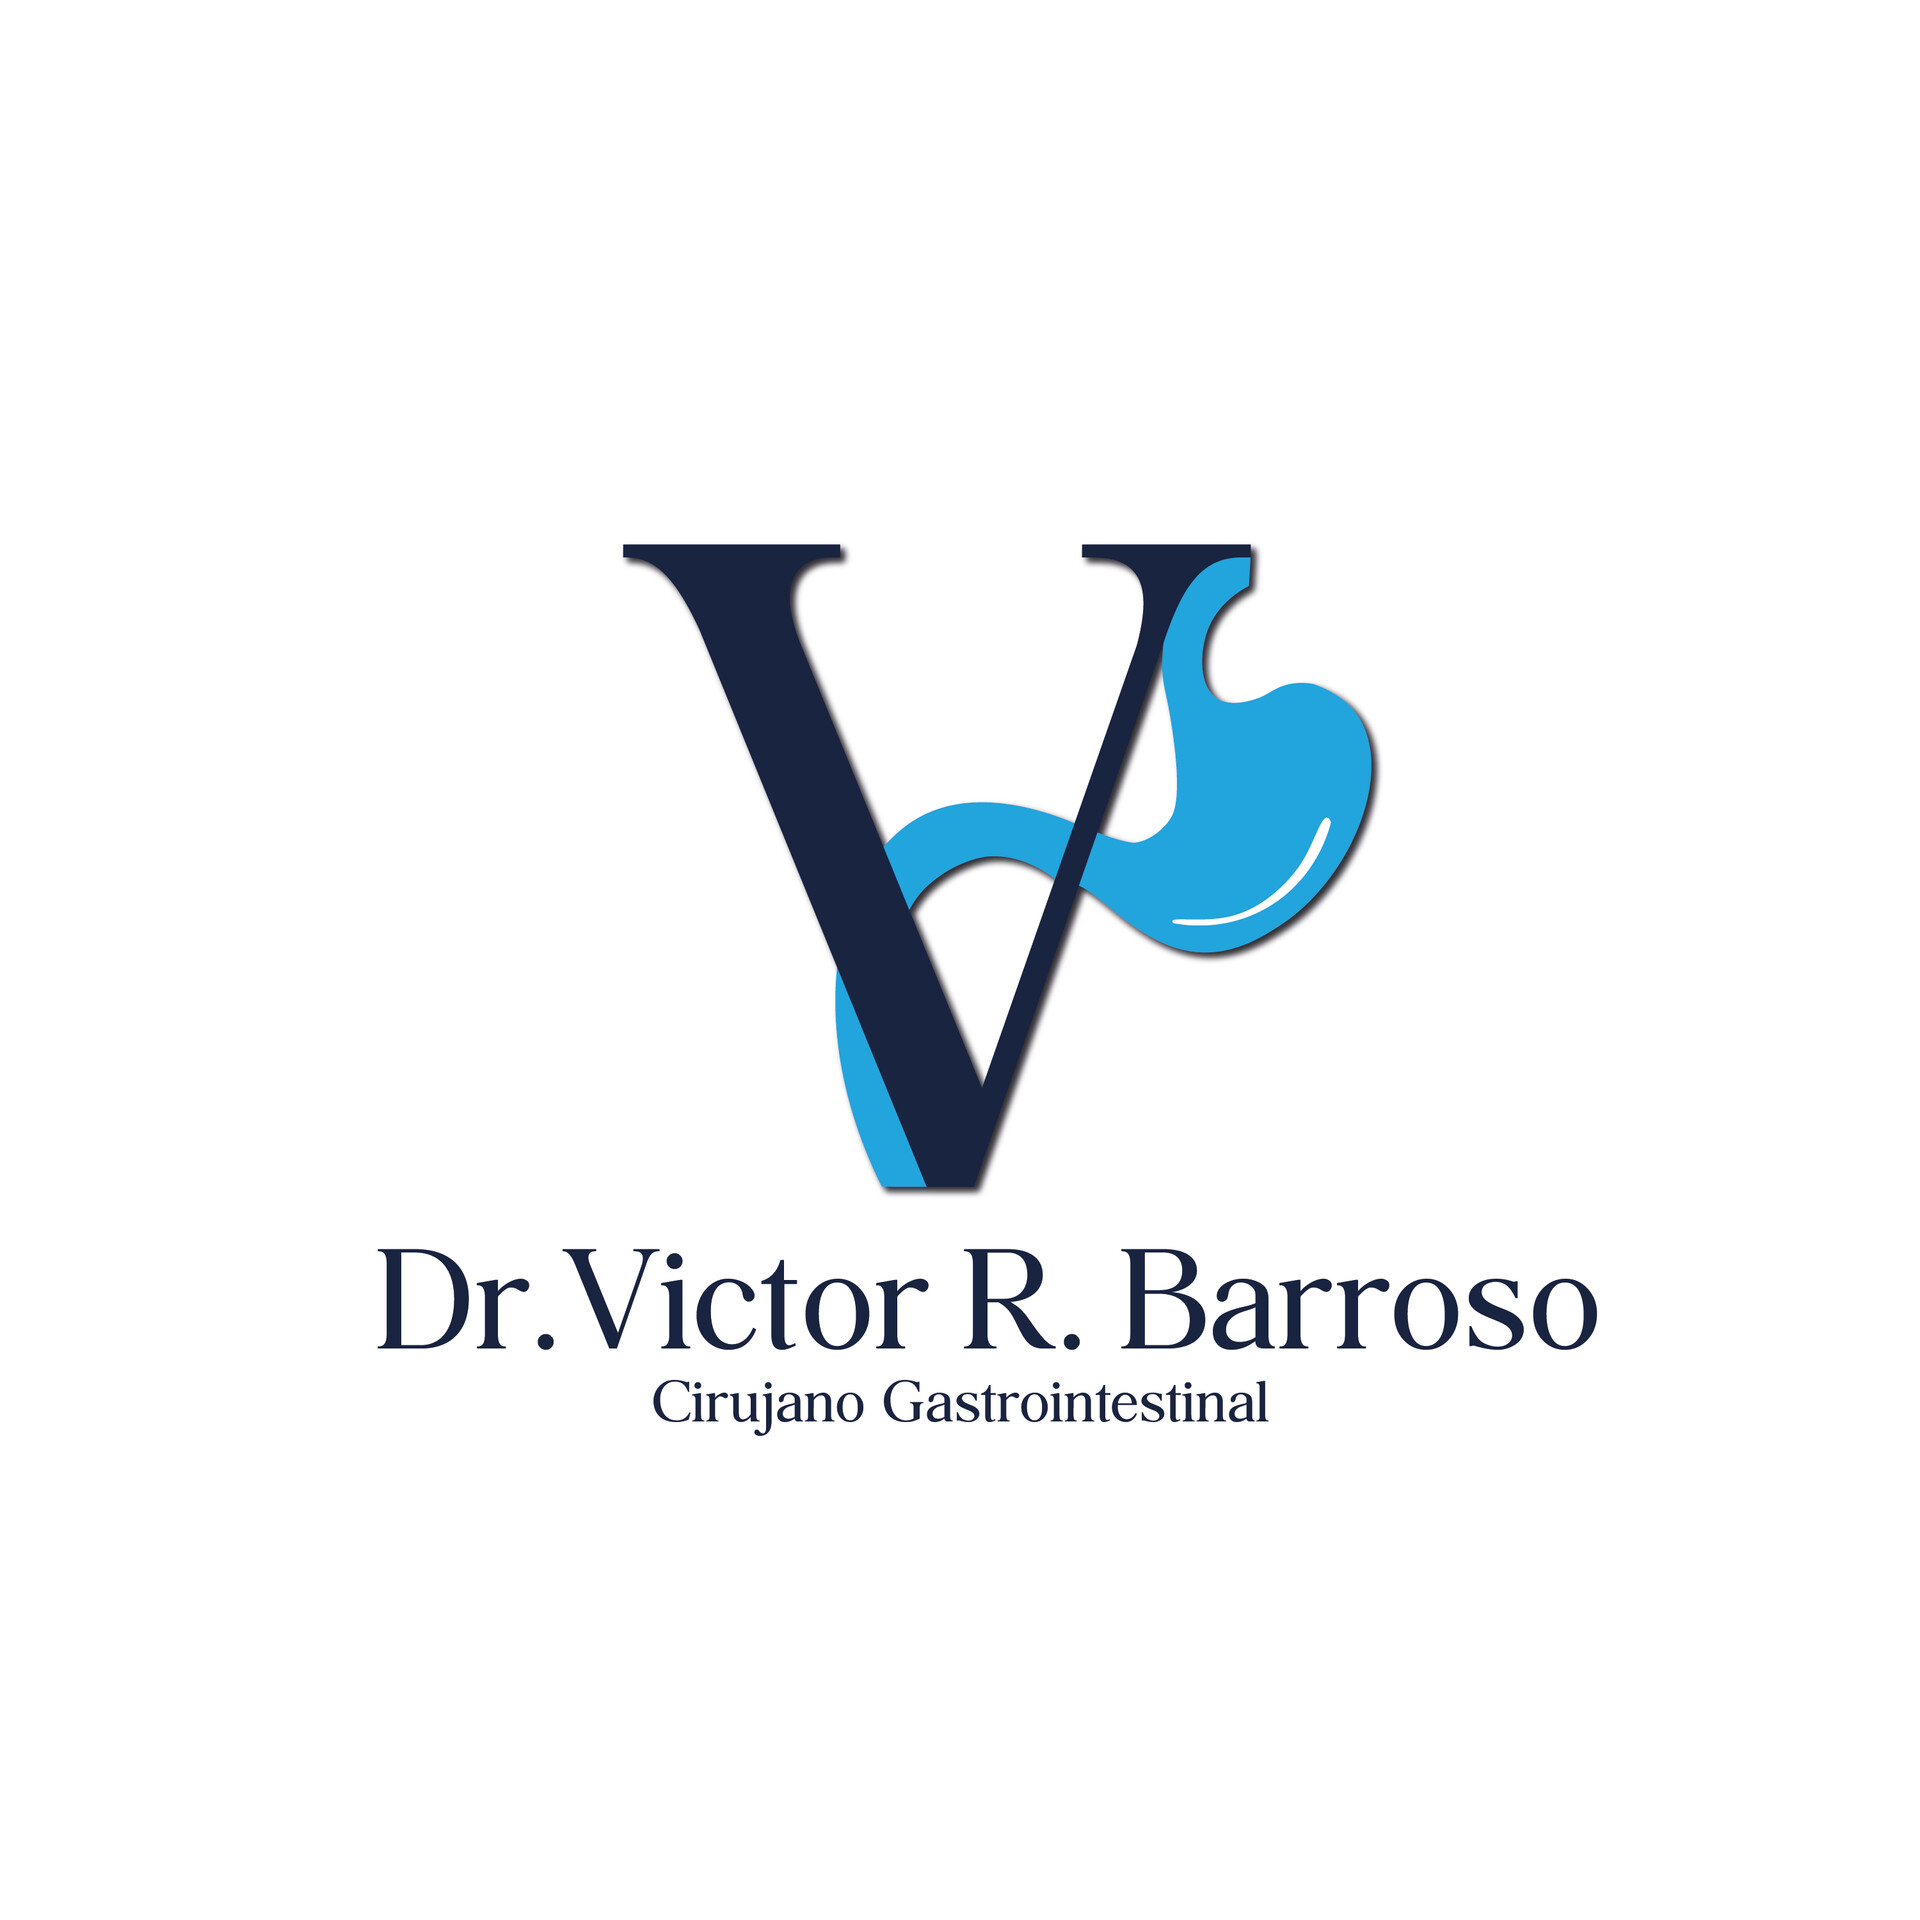 ArtStation - Dr. Victor R. Barroso Logo